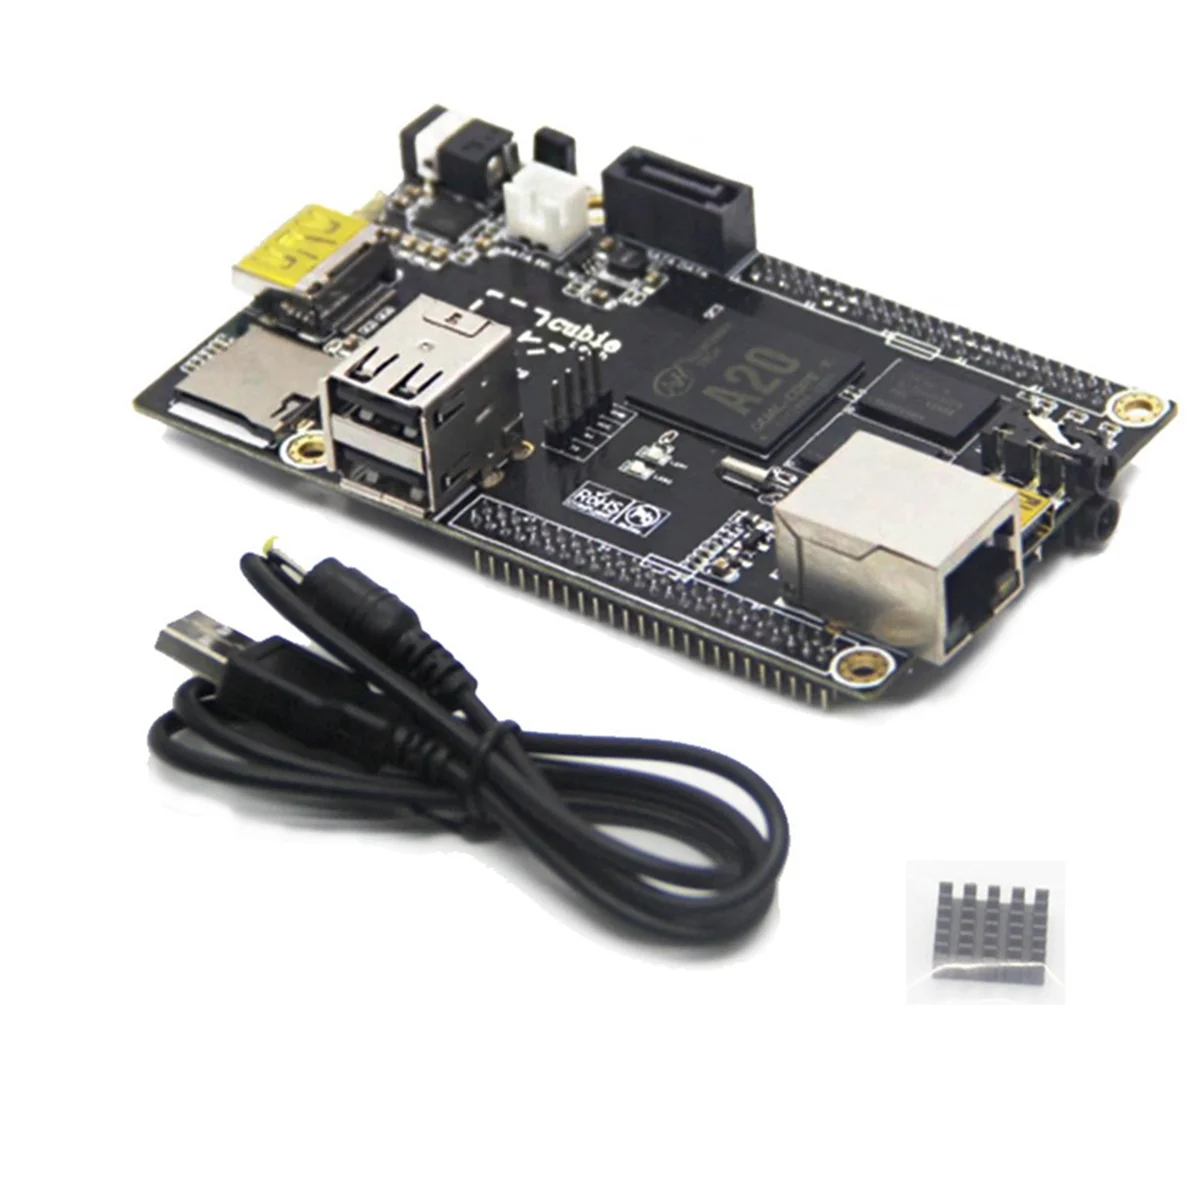 

Cubieboard2 Development Board 1GB DDR3 8G EMMC ARM Cortex-A7 Dual-Core Allwinner A20 Core Board Supports Android Linux